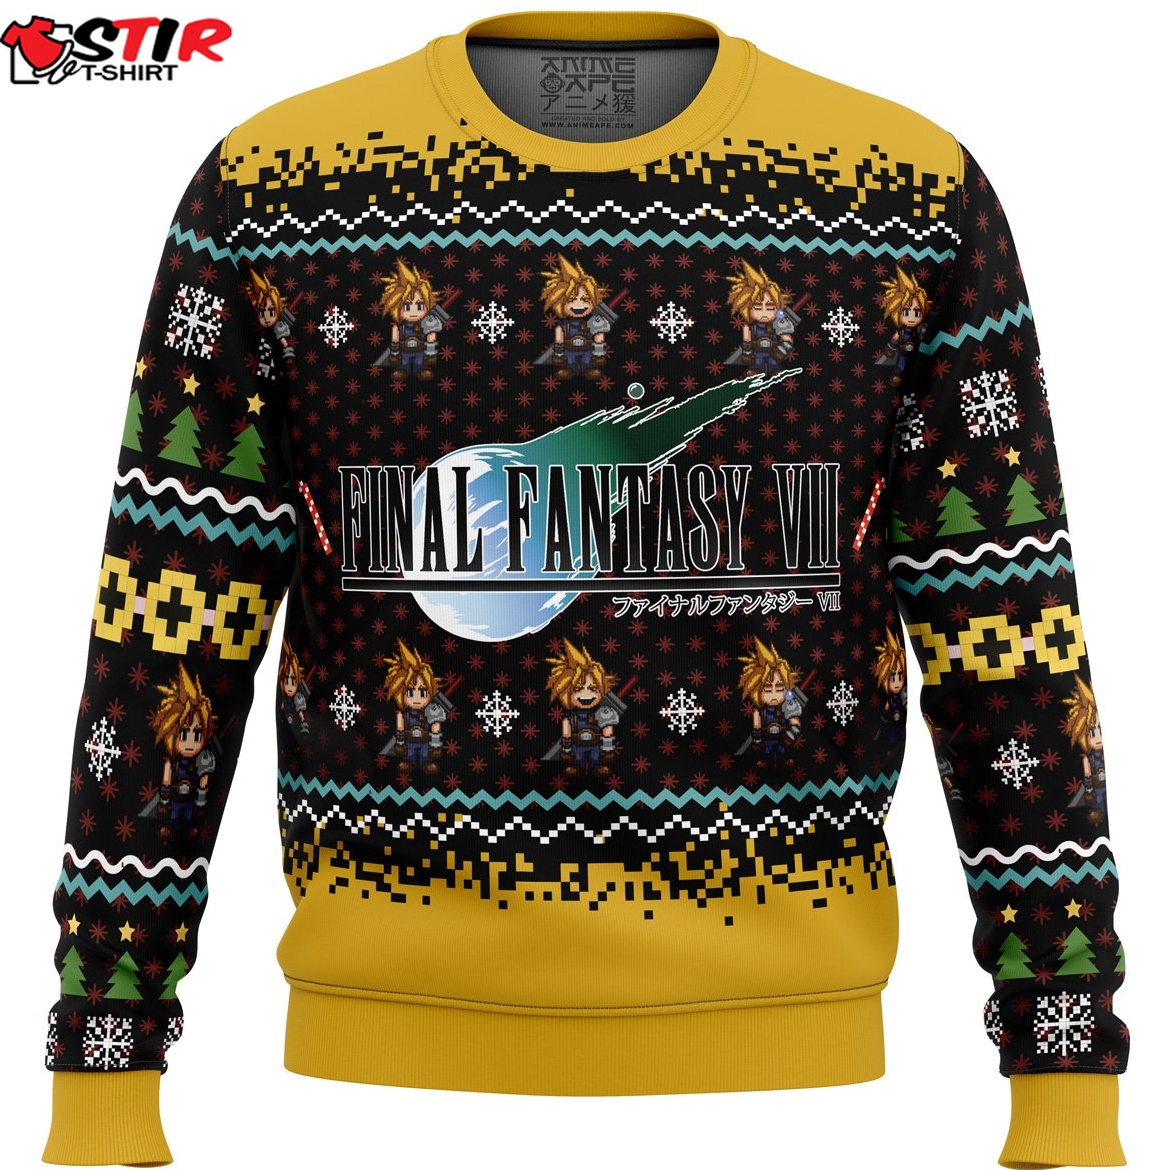 Final Fantasy Vii Ugly Christmas Sweater Stirtshirt